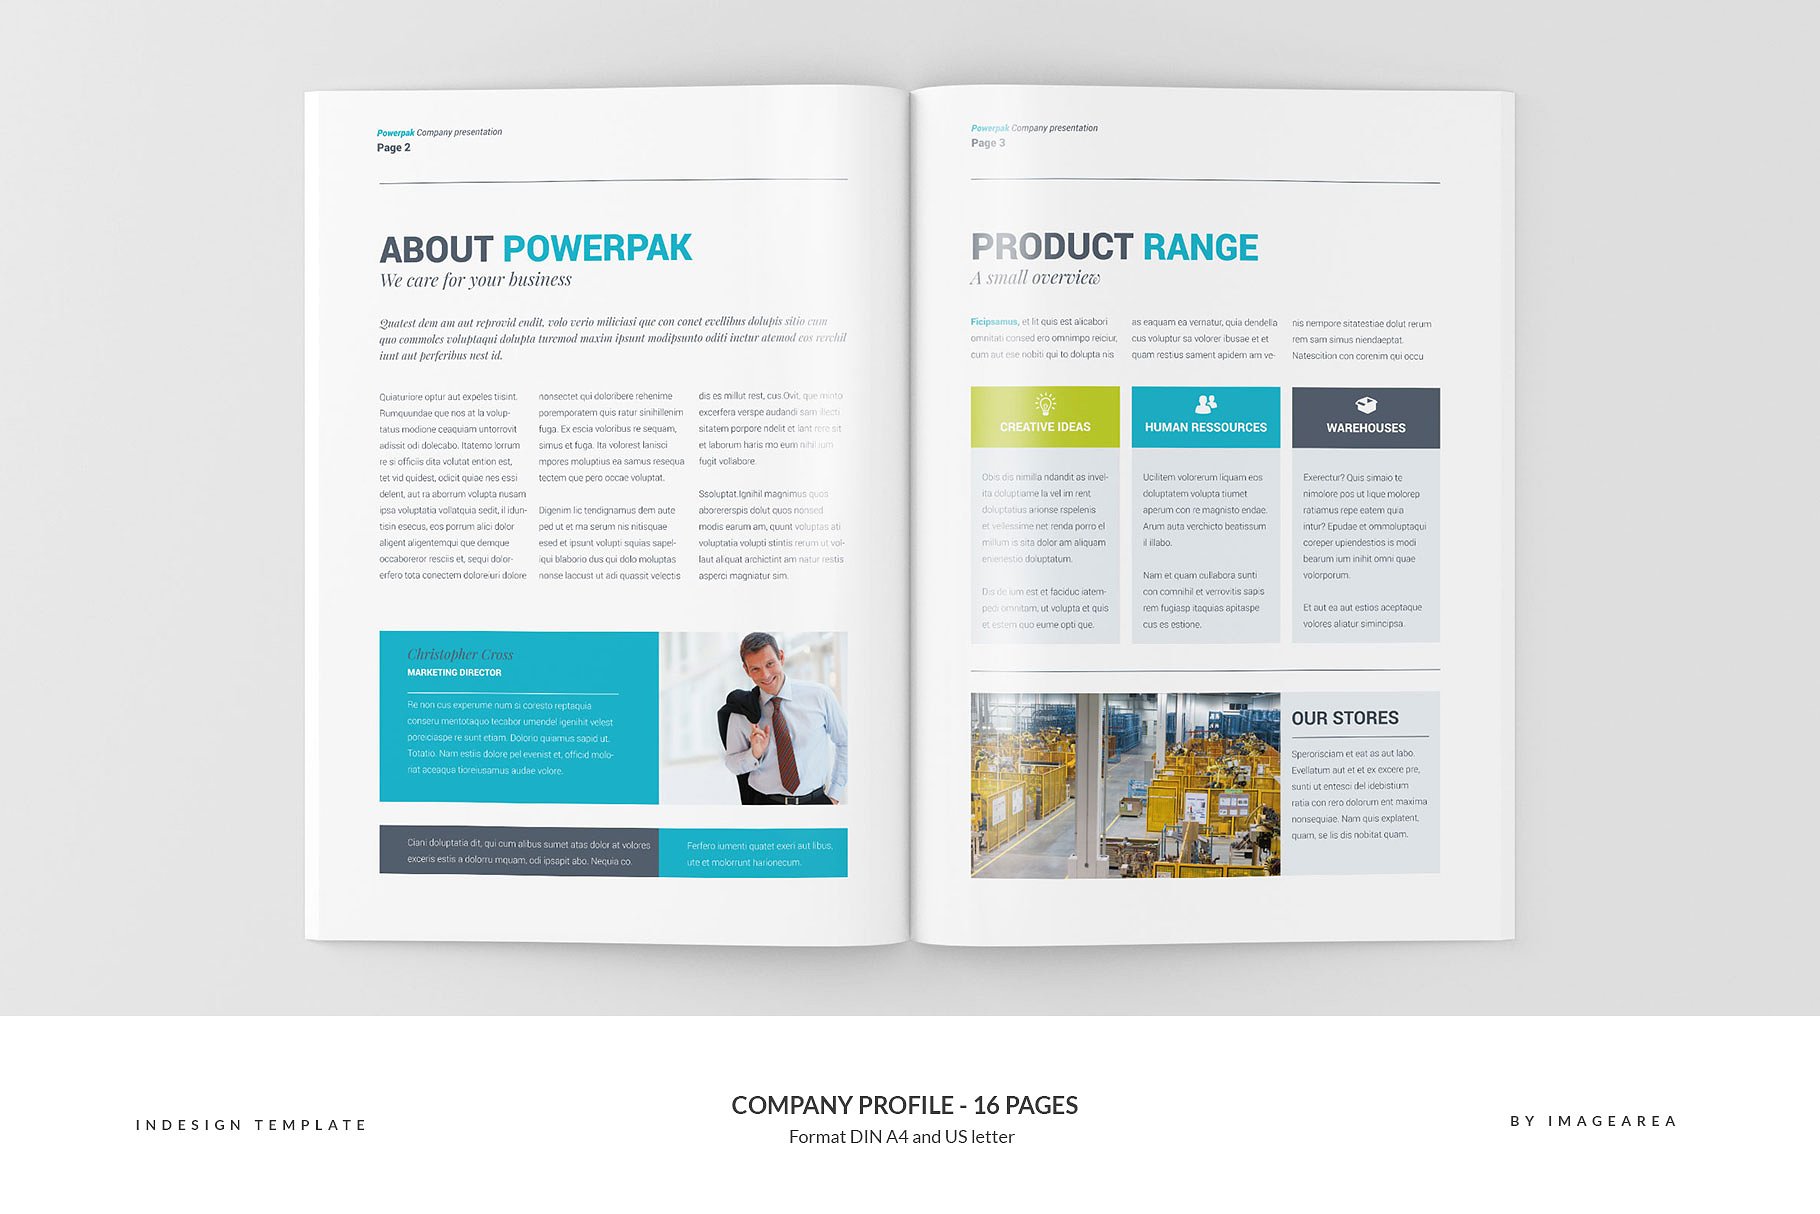 企业宣传画册设计模板 Company Profile – 16 Pages插图(2)